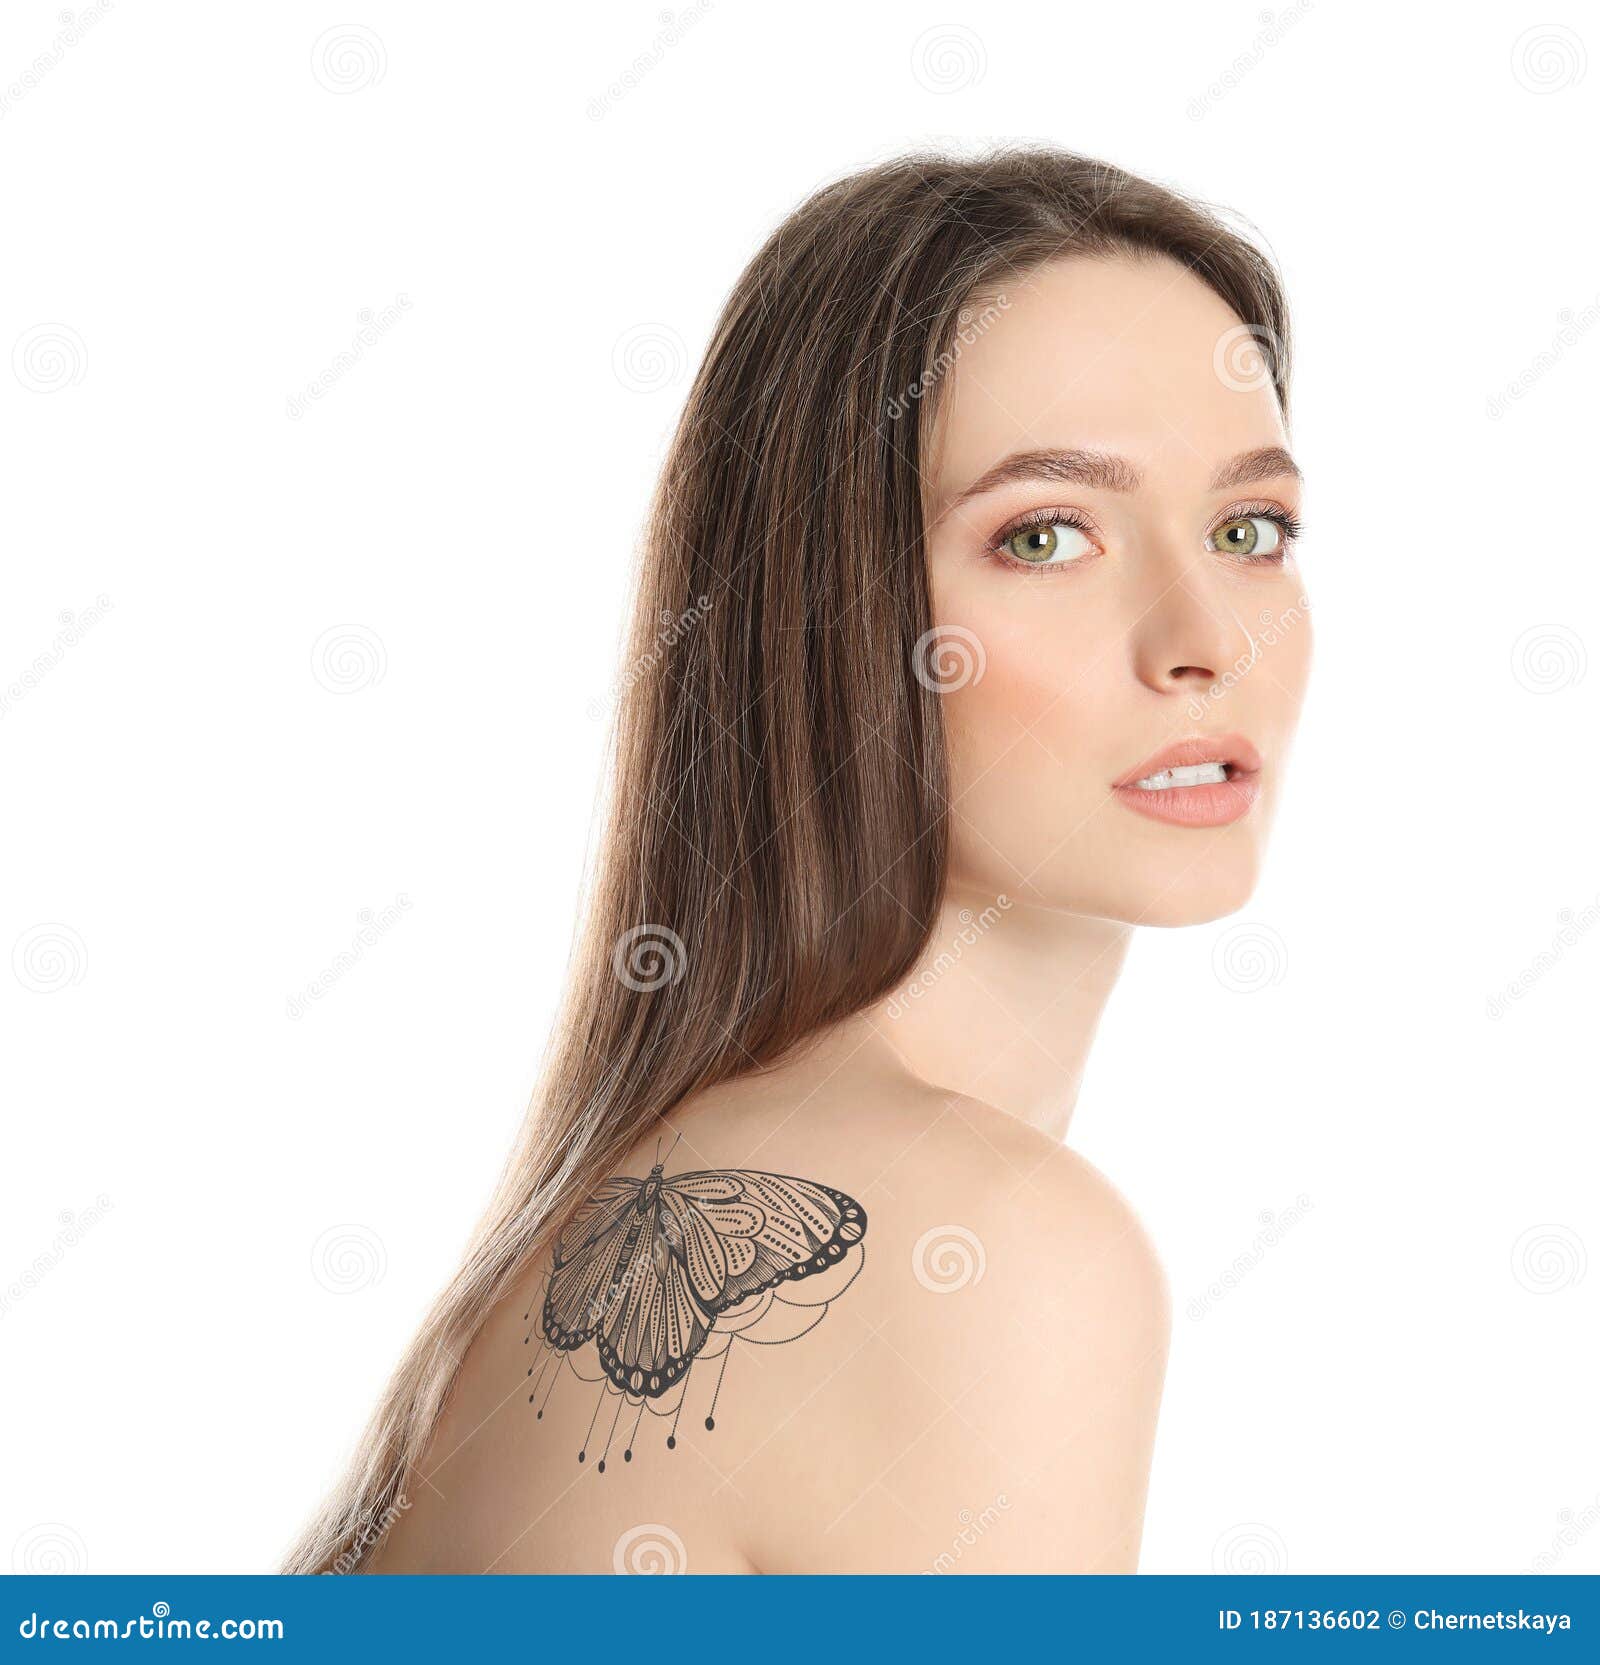 Long Lasting Transfer Tattoos Flower Fake Tattoo for Women Arm Chest Body  Art Sticker Juice Tattoo Temporary Waterproof - AliExpress